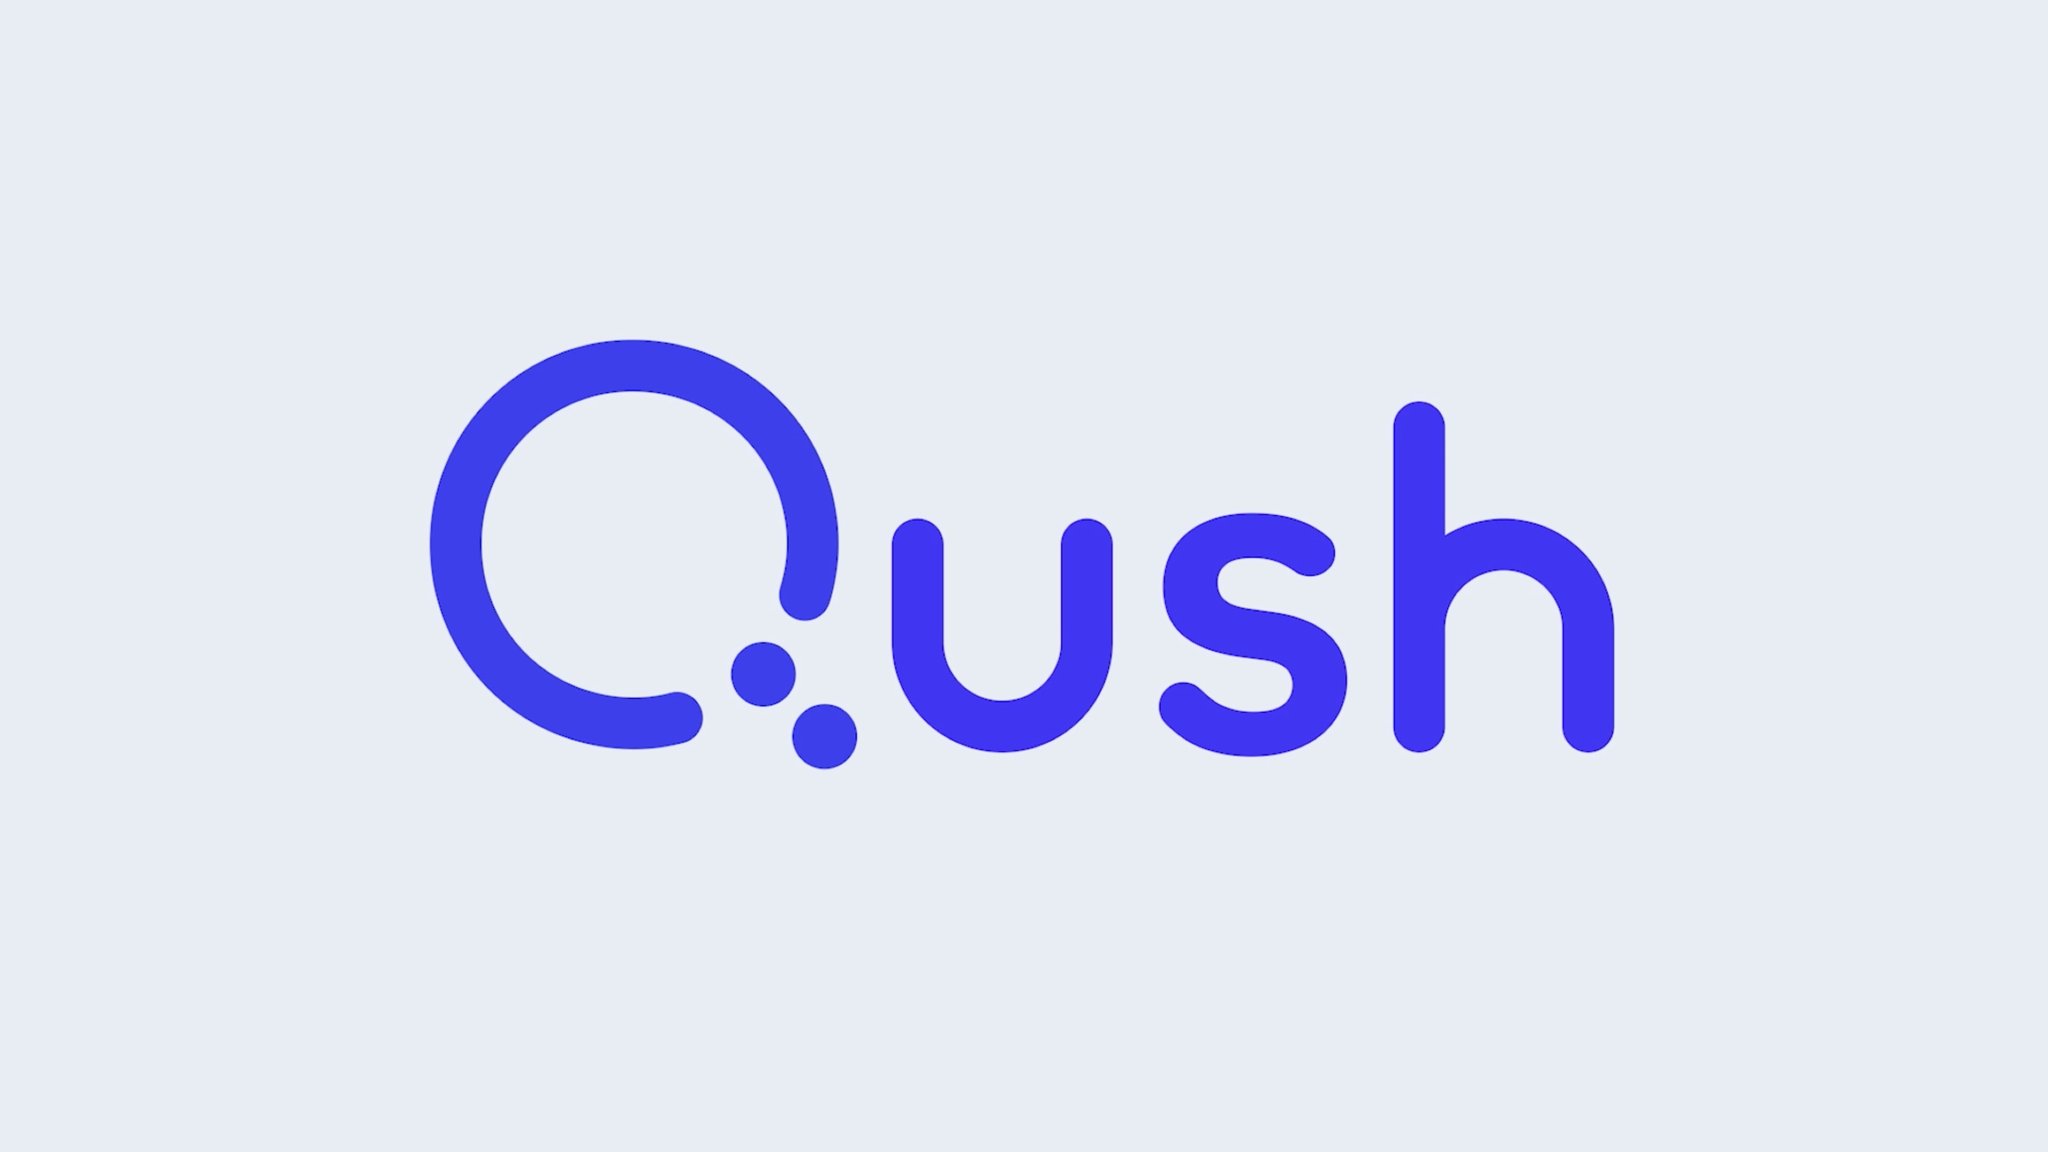 Qush video first frame